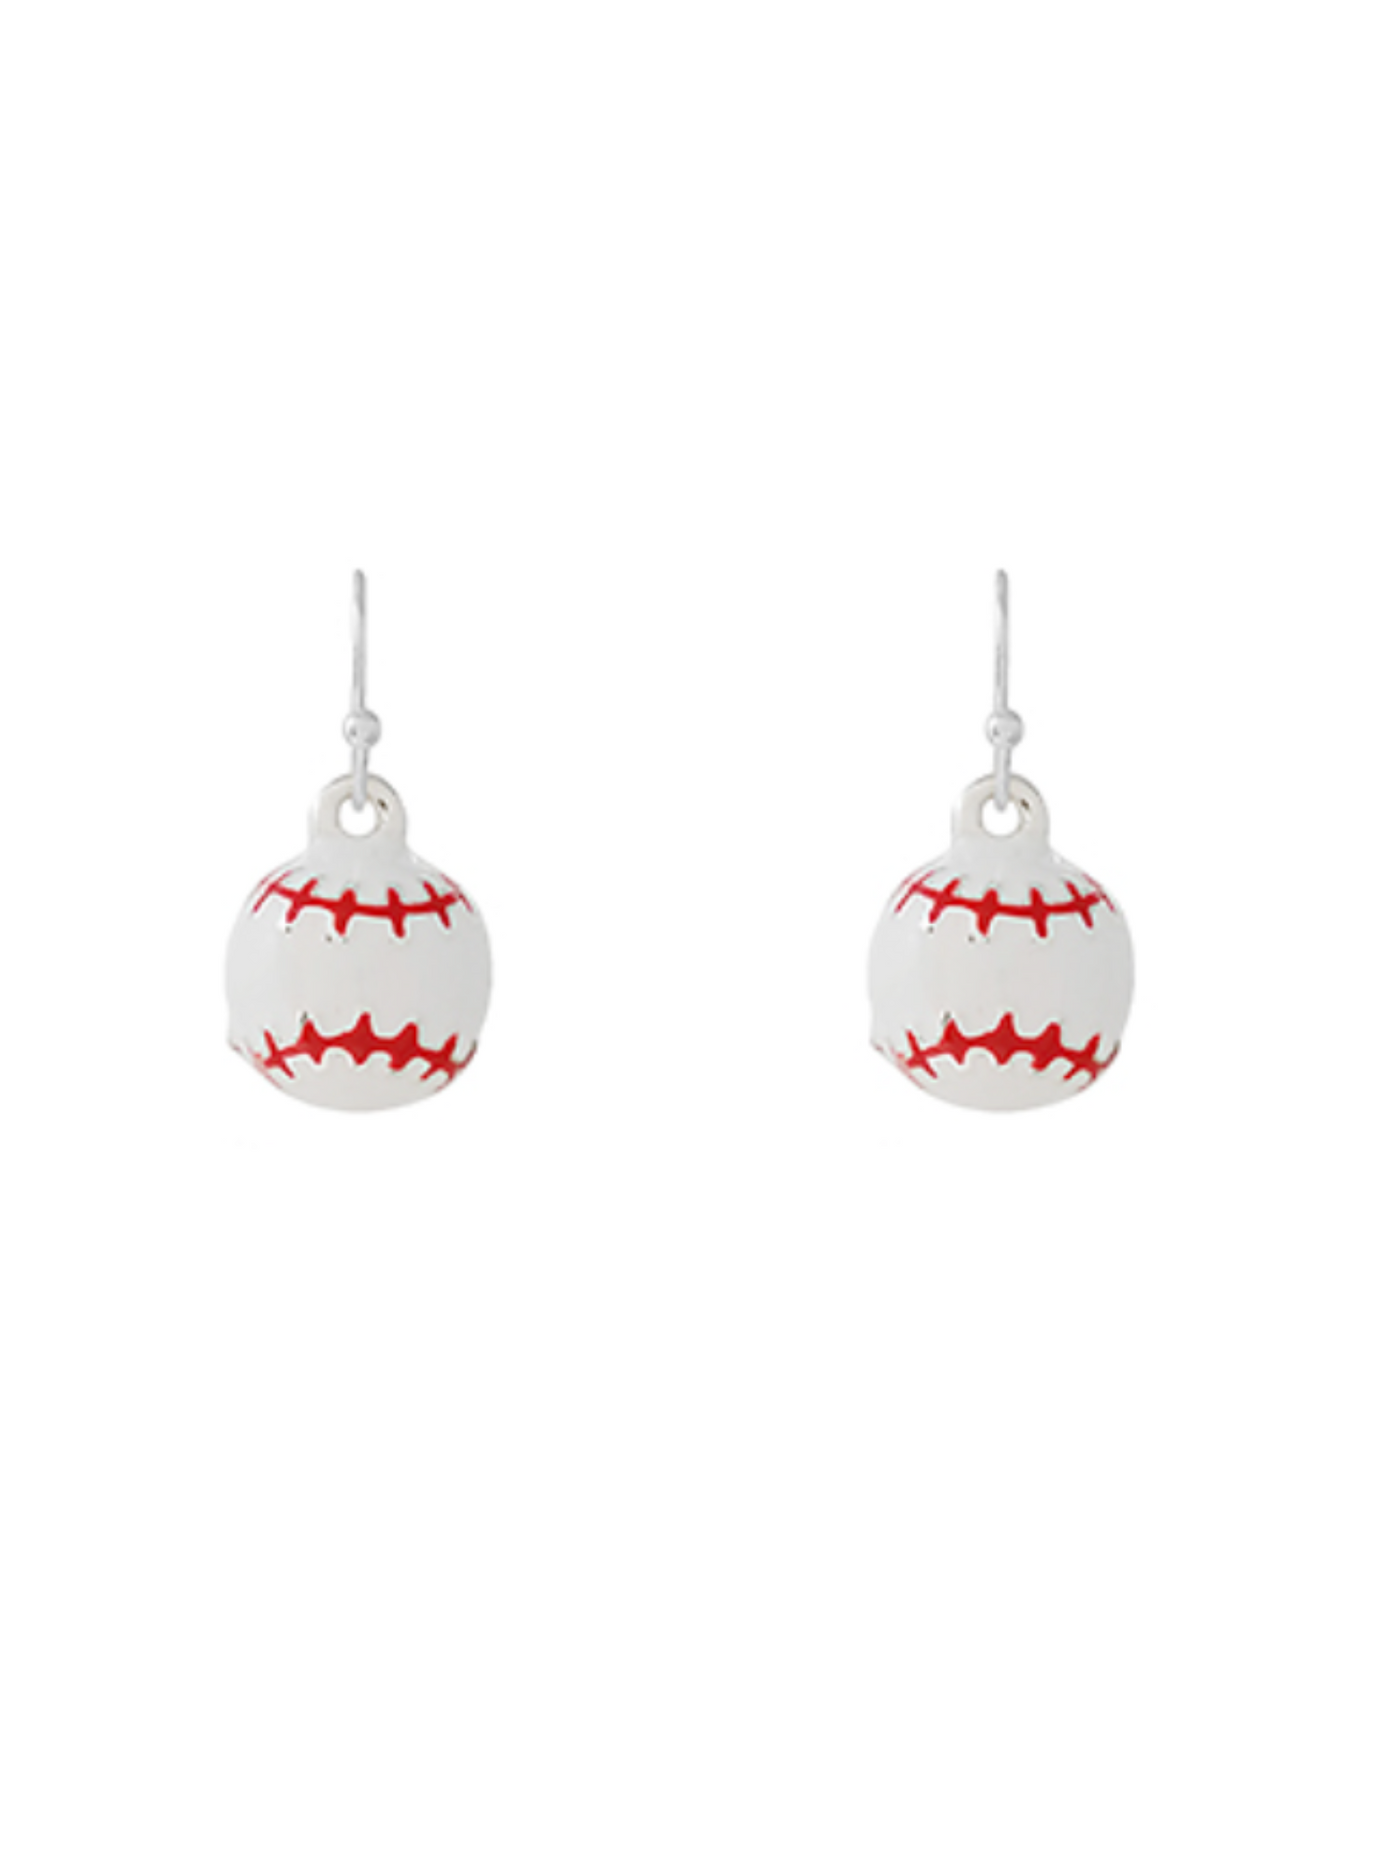 3D Baseball Earrings in silver on white background.